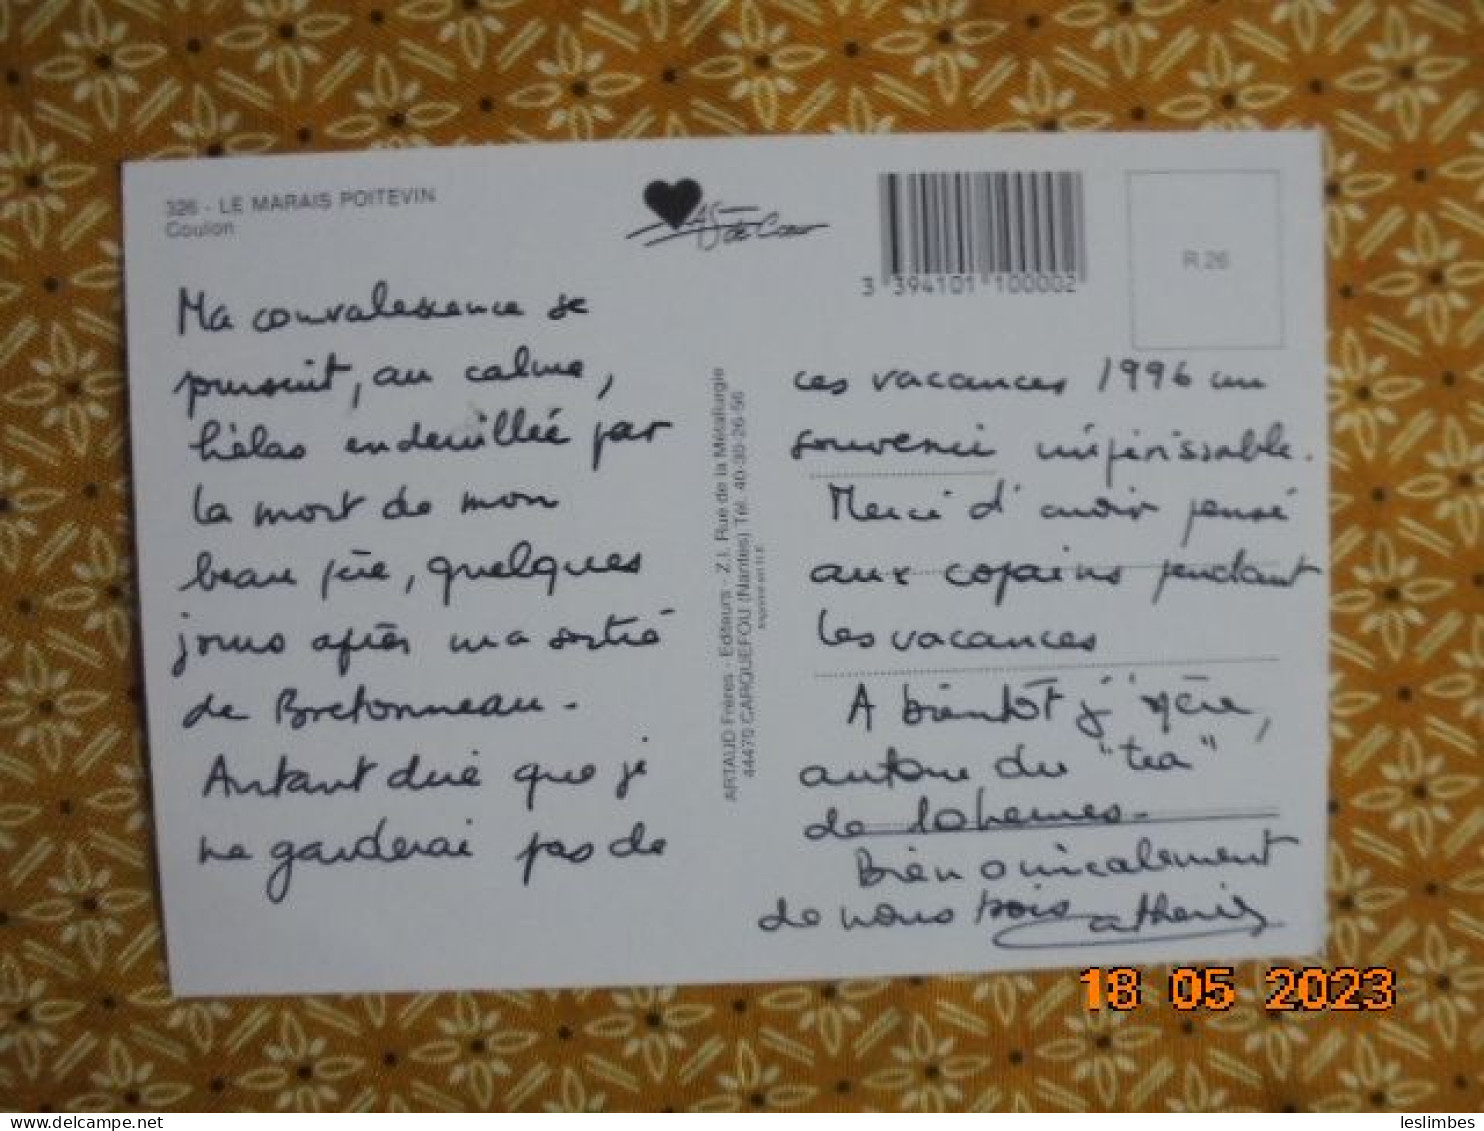 Le Marais Poitevin. Coulon. AS De Coeur 326R26 PM 1996 - Poitou-Charentes